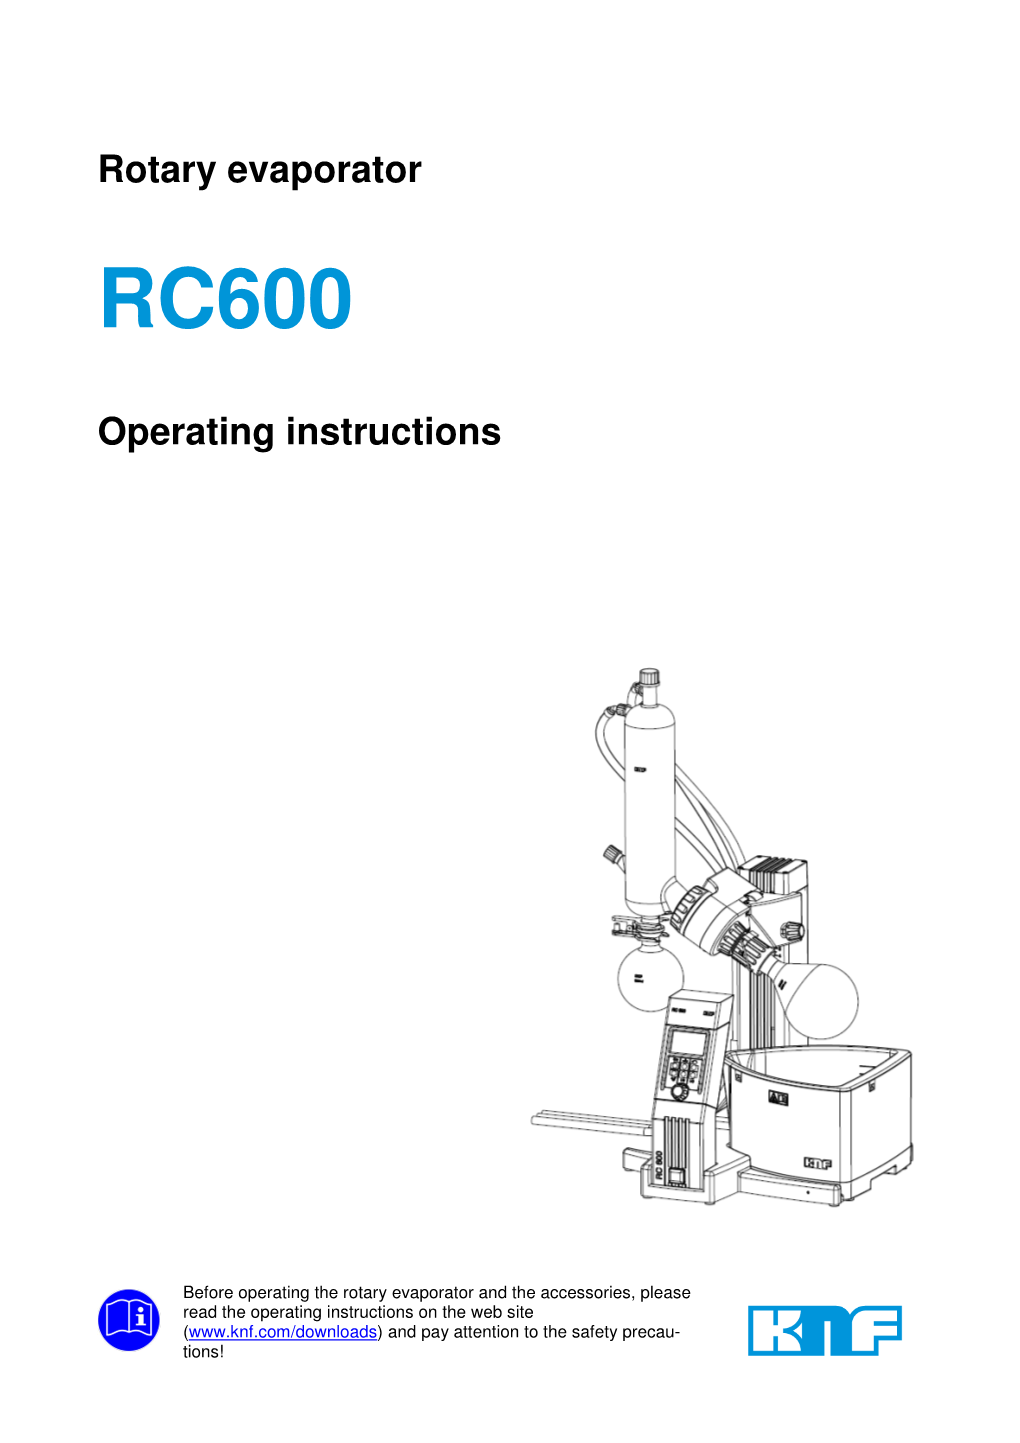 Rotary Evaporator RC600